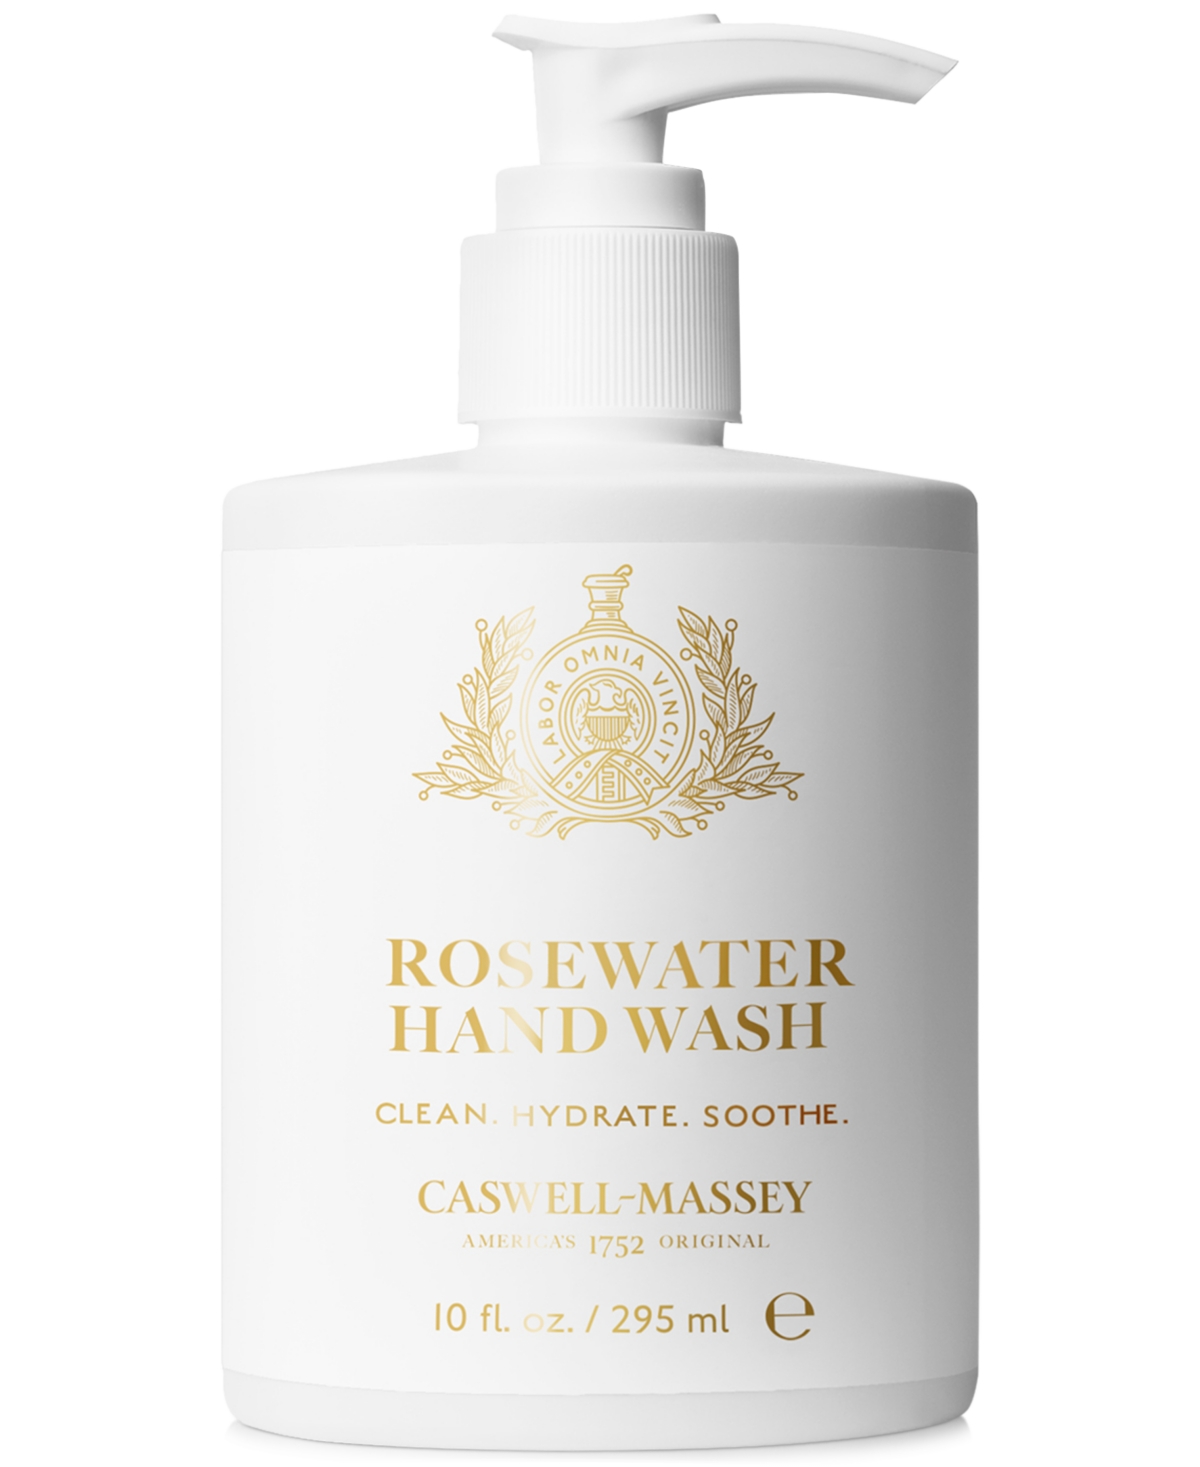 CASWELL-MASSEY CENTURIES ROSEWATER HAND WASH, 10 OZ.